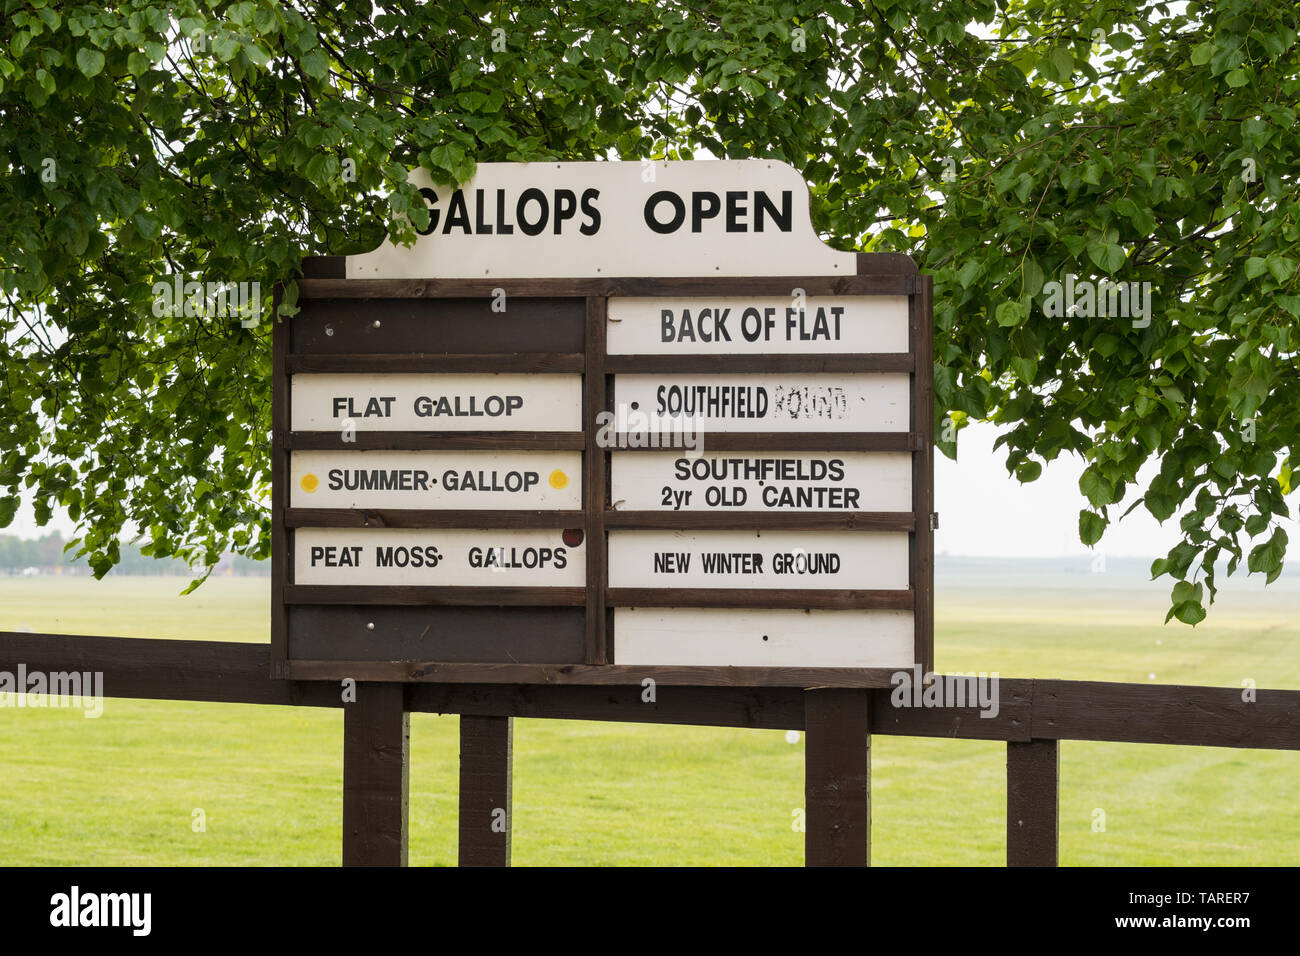 Gallops Open sign at Newmarket Racecourse, Newmarket Heath, Newmarket, England, UK Stock Photo